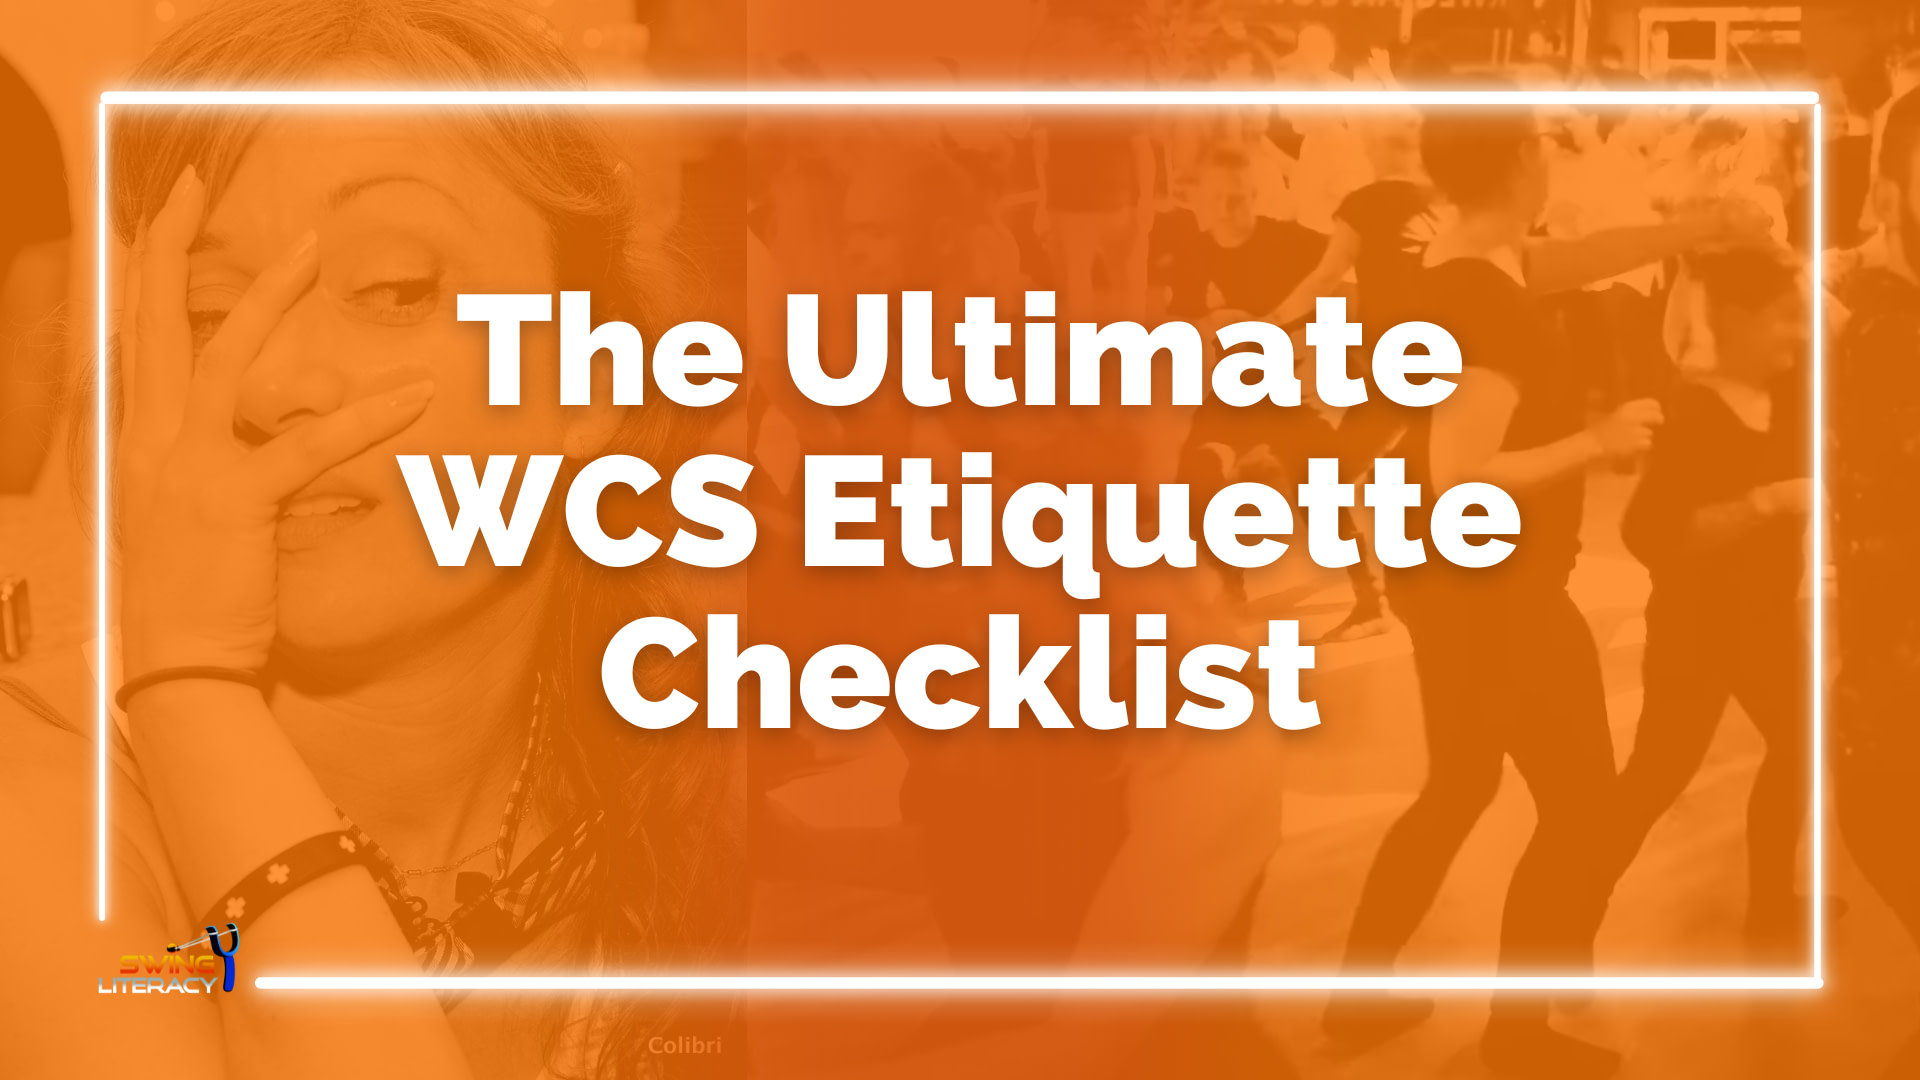 The Ultimate WCS Etiquette Checklist